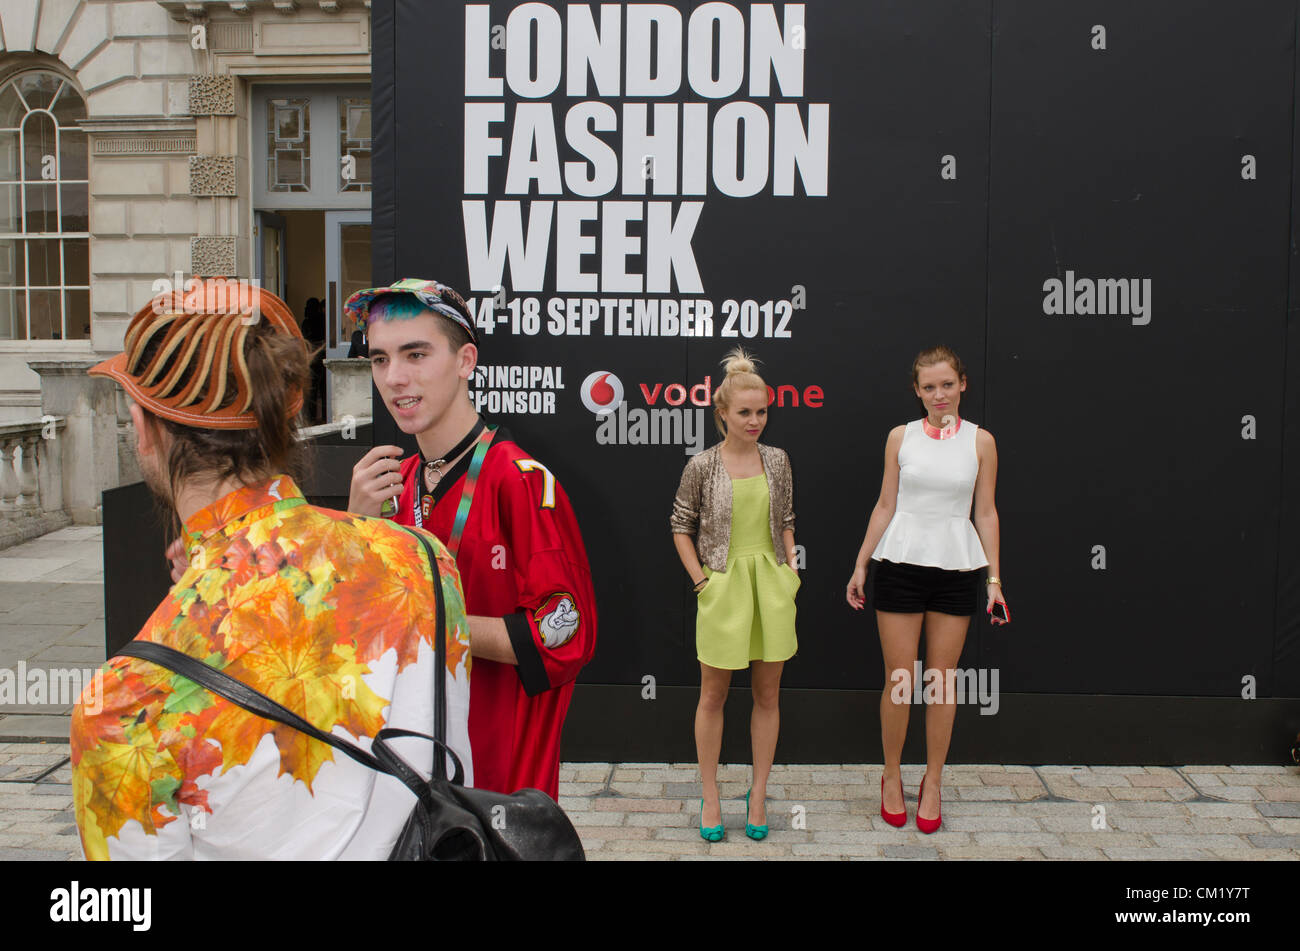 Deux hommes et deux femmes London Fashion week 16 septembre 2012 UK Somerset House, Londres Uk Banque D'Images